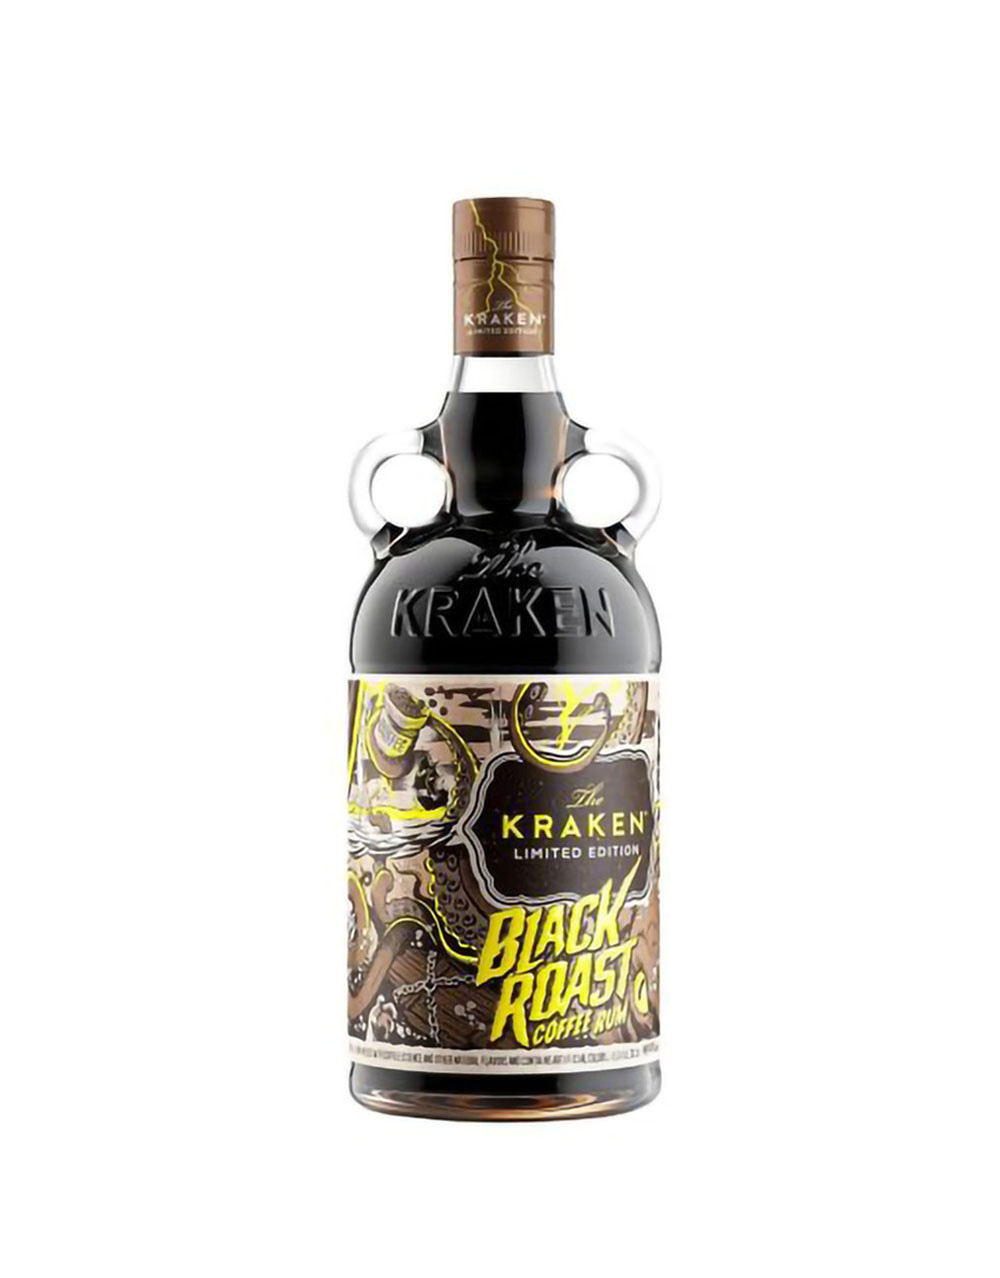 The Kraken Attacks Texas Limited Edition Rum